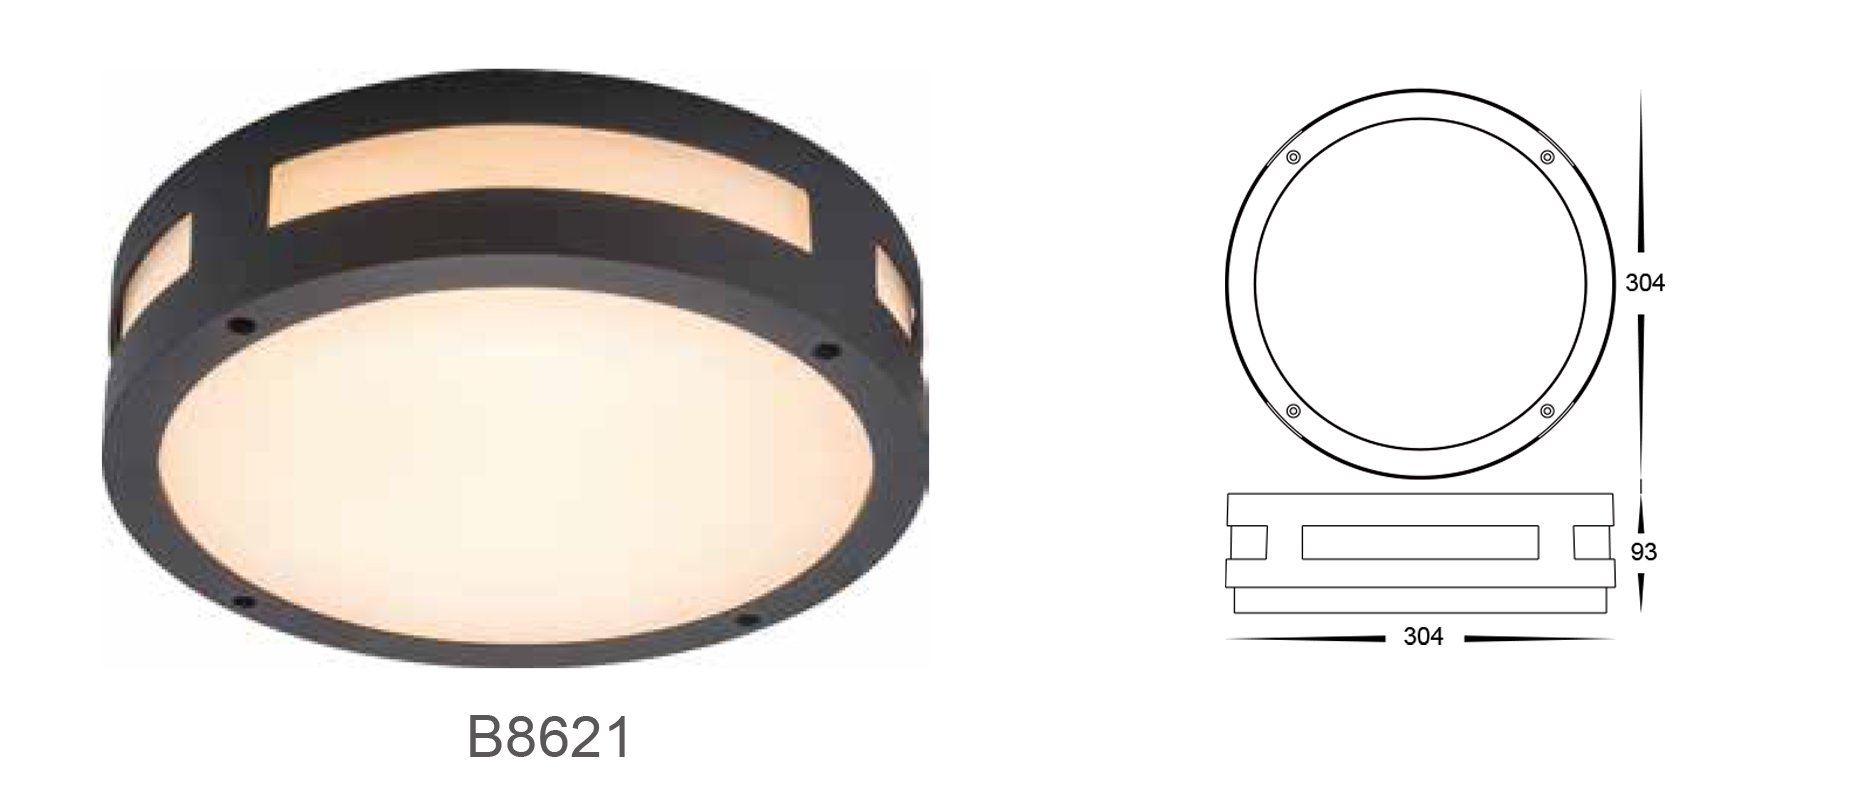 SINOBASE LED wall lamp - W8621--.jpg